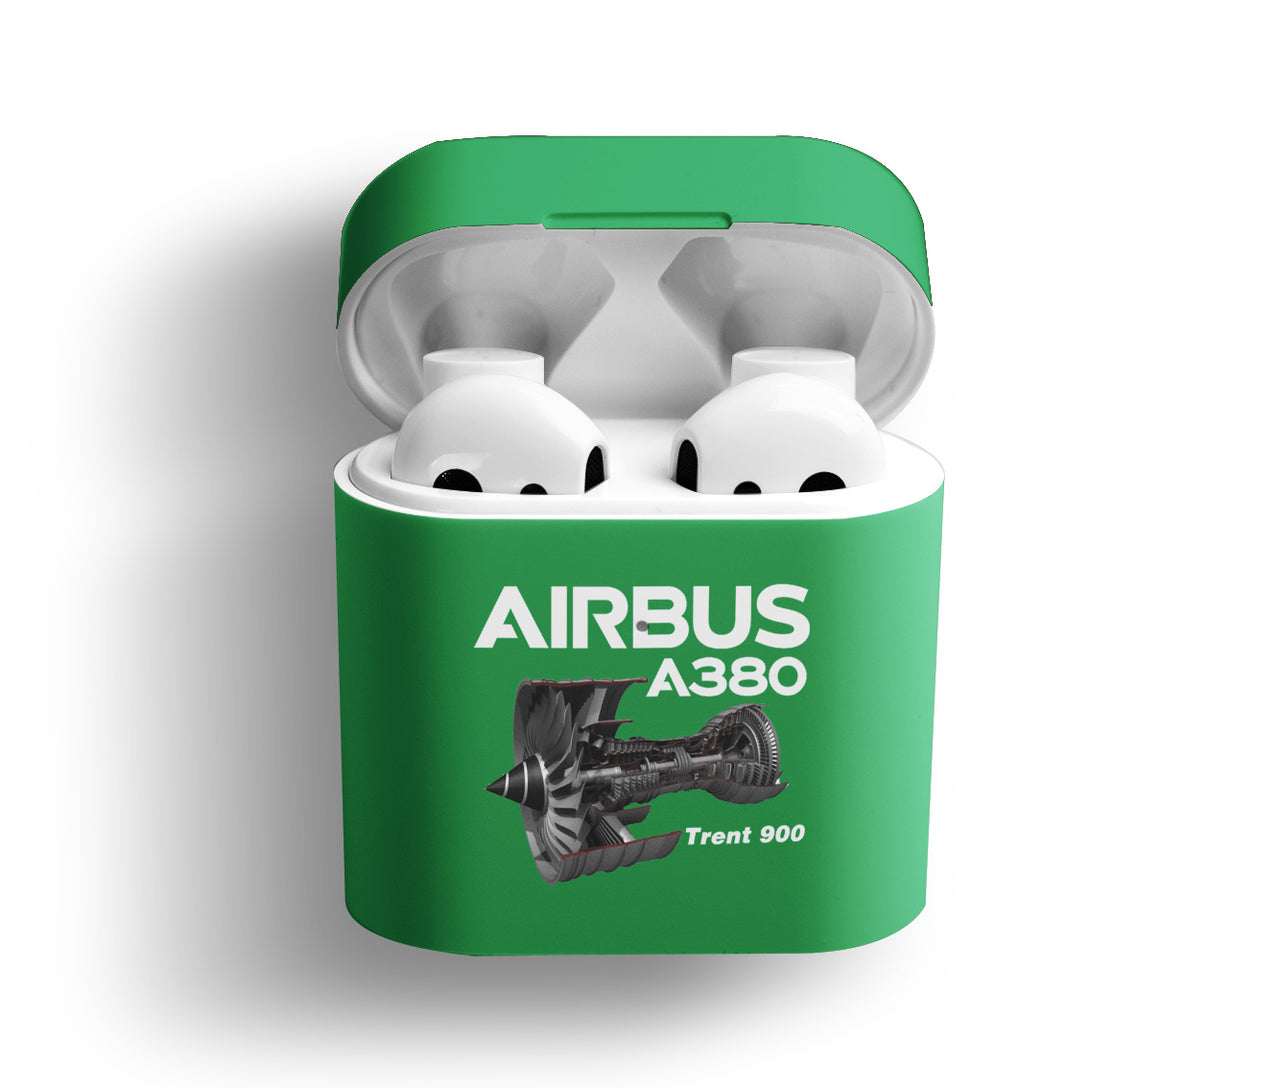 Airbus A380 & Trent 900 Engine Designed AirPods  Cases